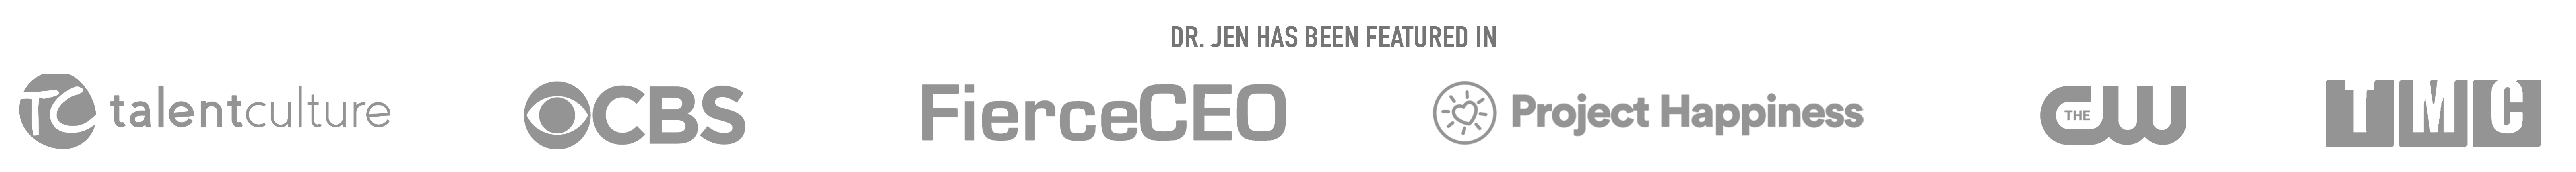 Dr Jen Faber Media Logos 2021